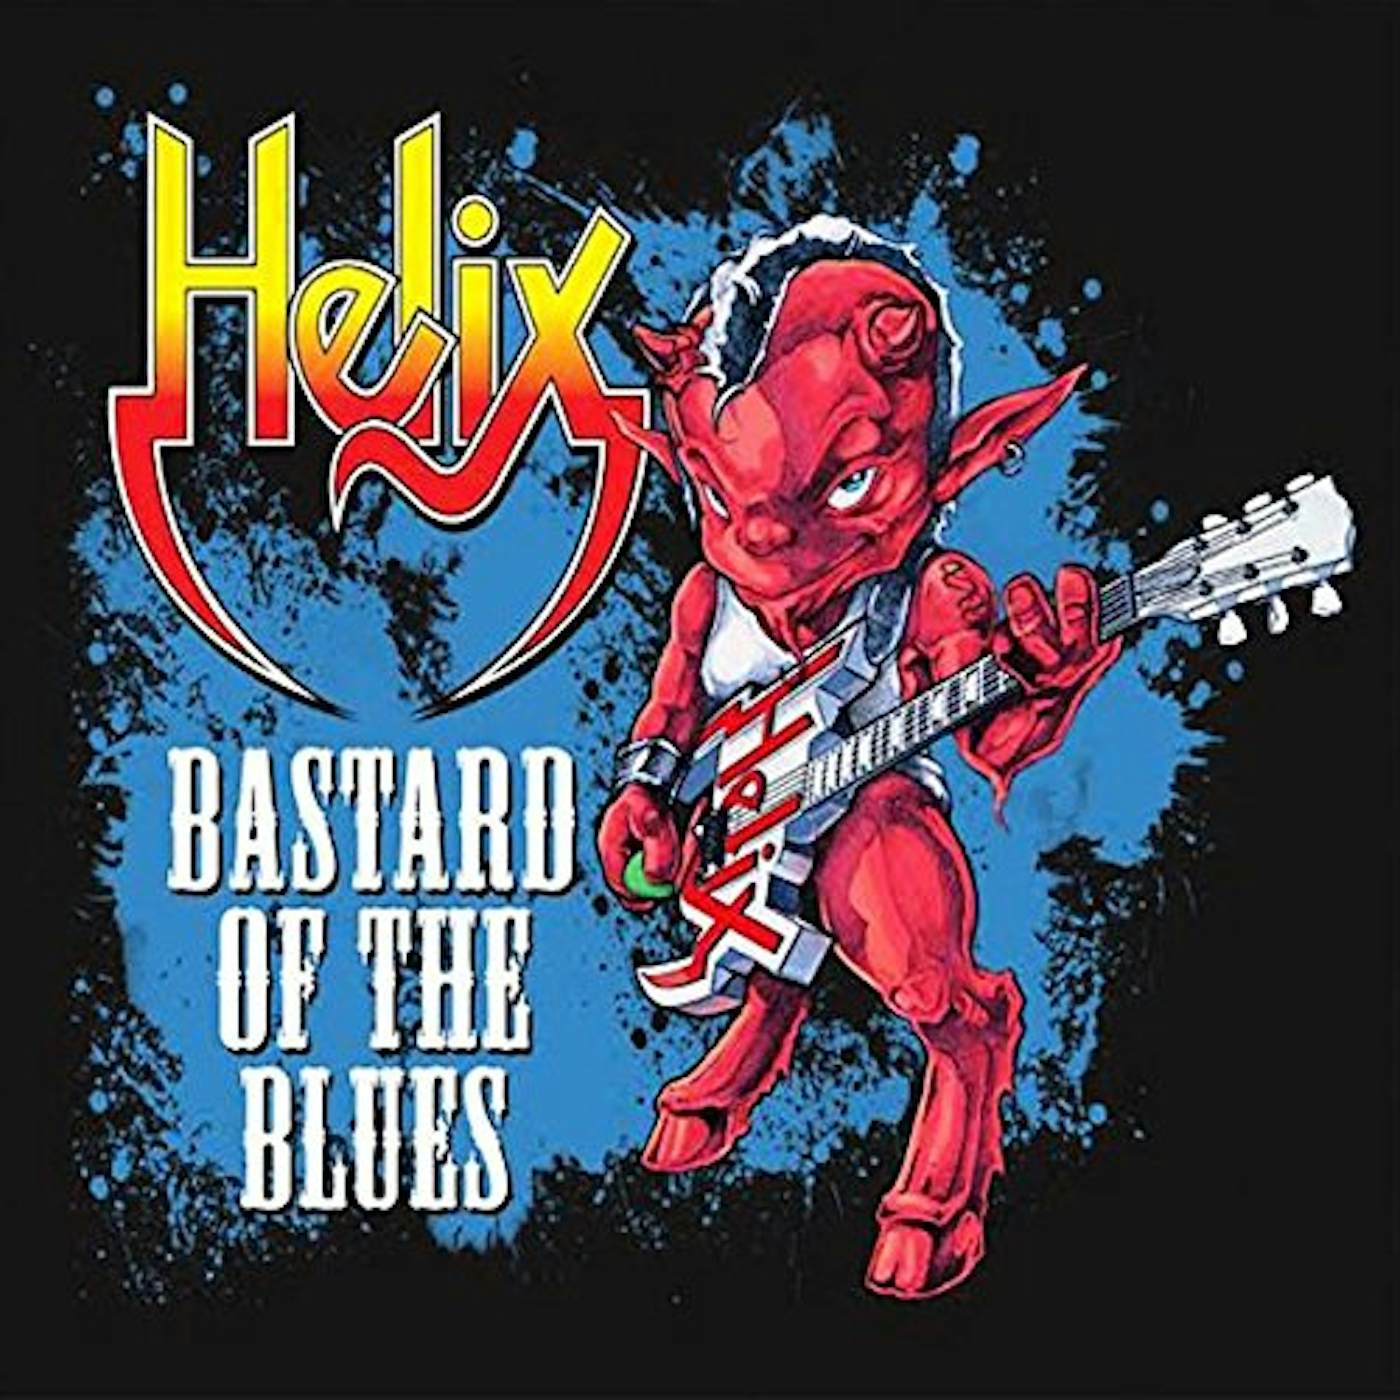 Helix BASTARD OF THE BLUES CD